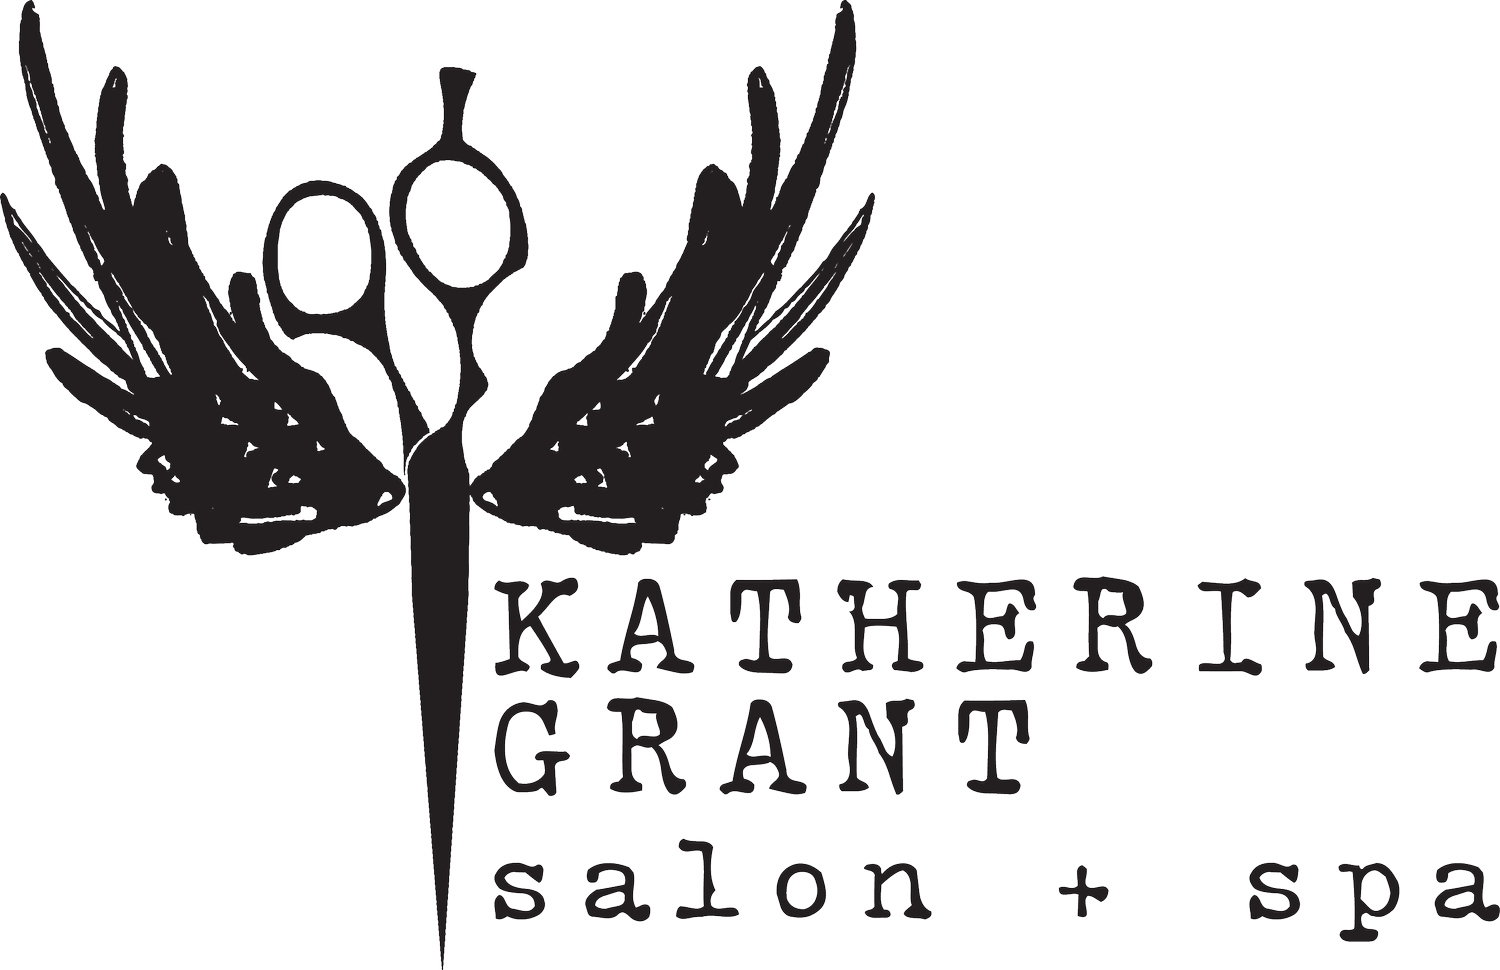 Katherine Grant Salon + Spa